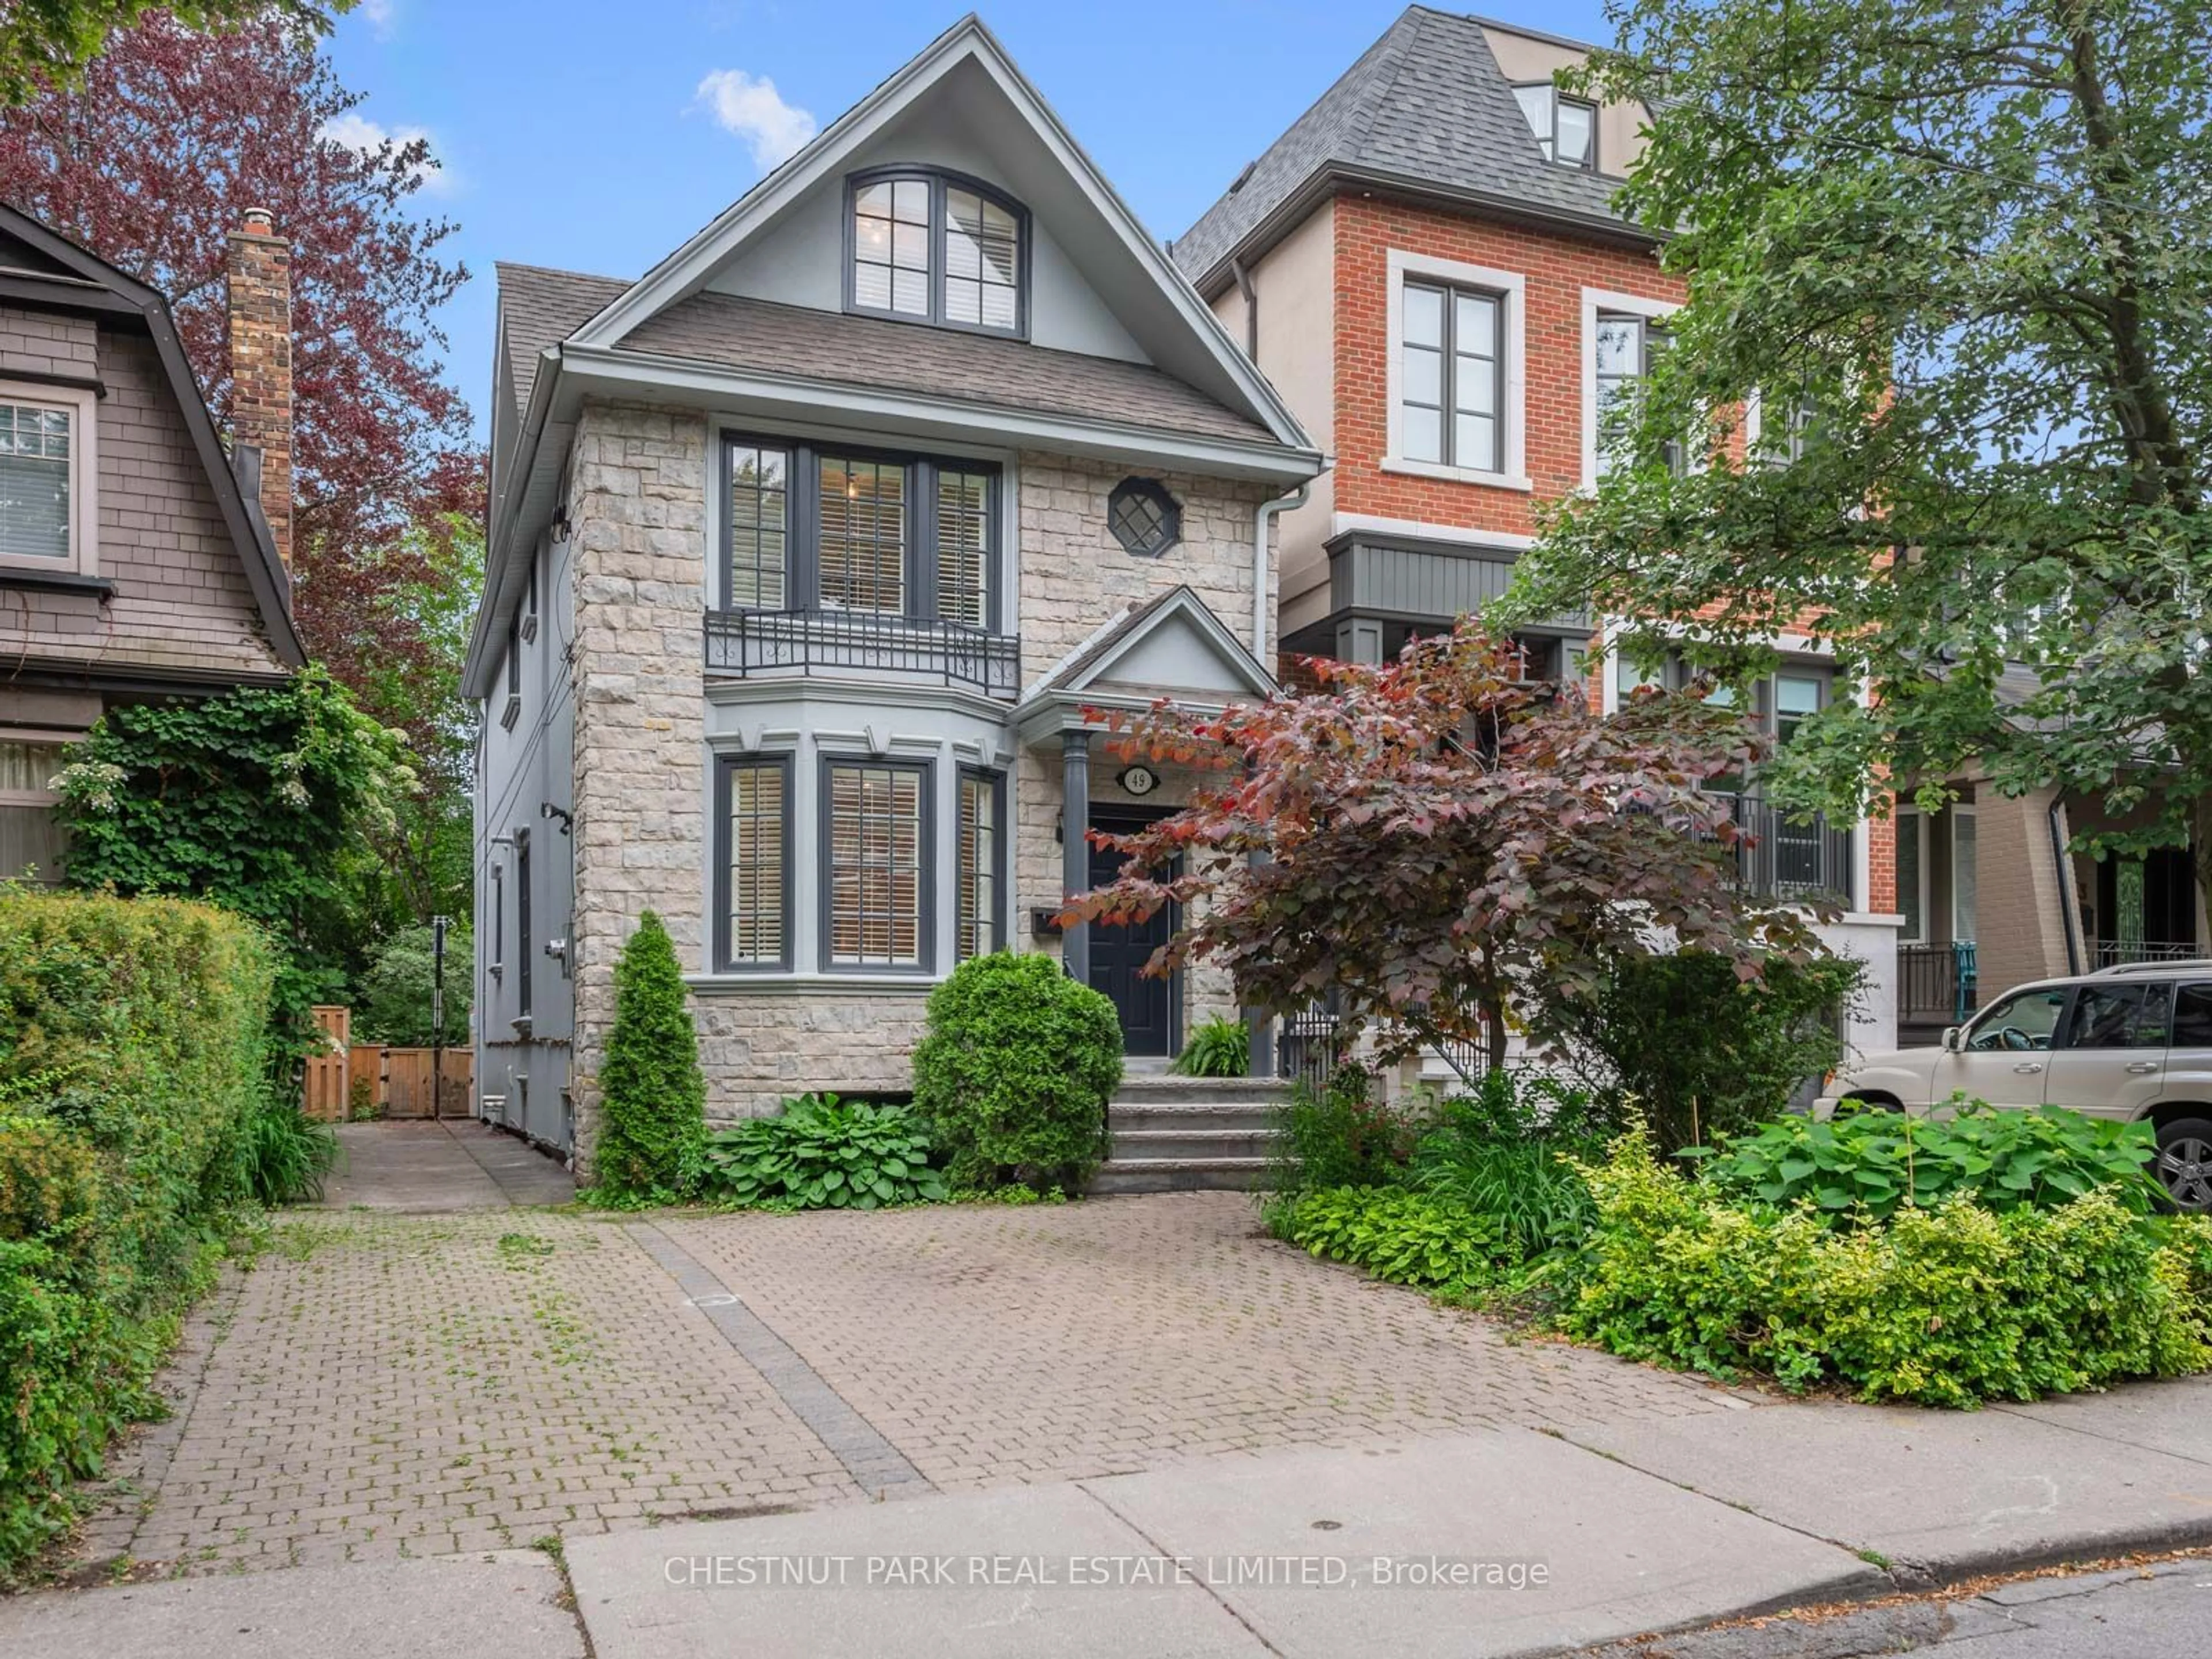 Home with brick exterior material for 49 Gormley Ave, Toronto Ontario M4V 1Y9